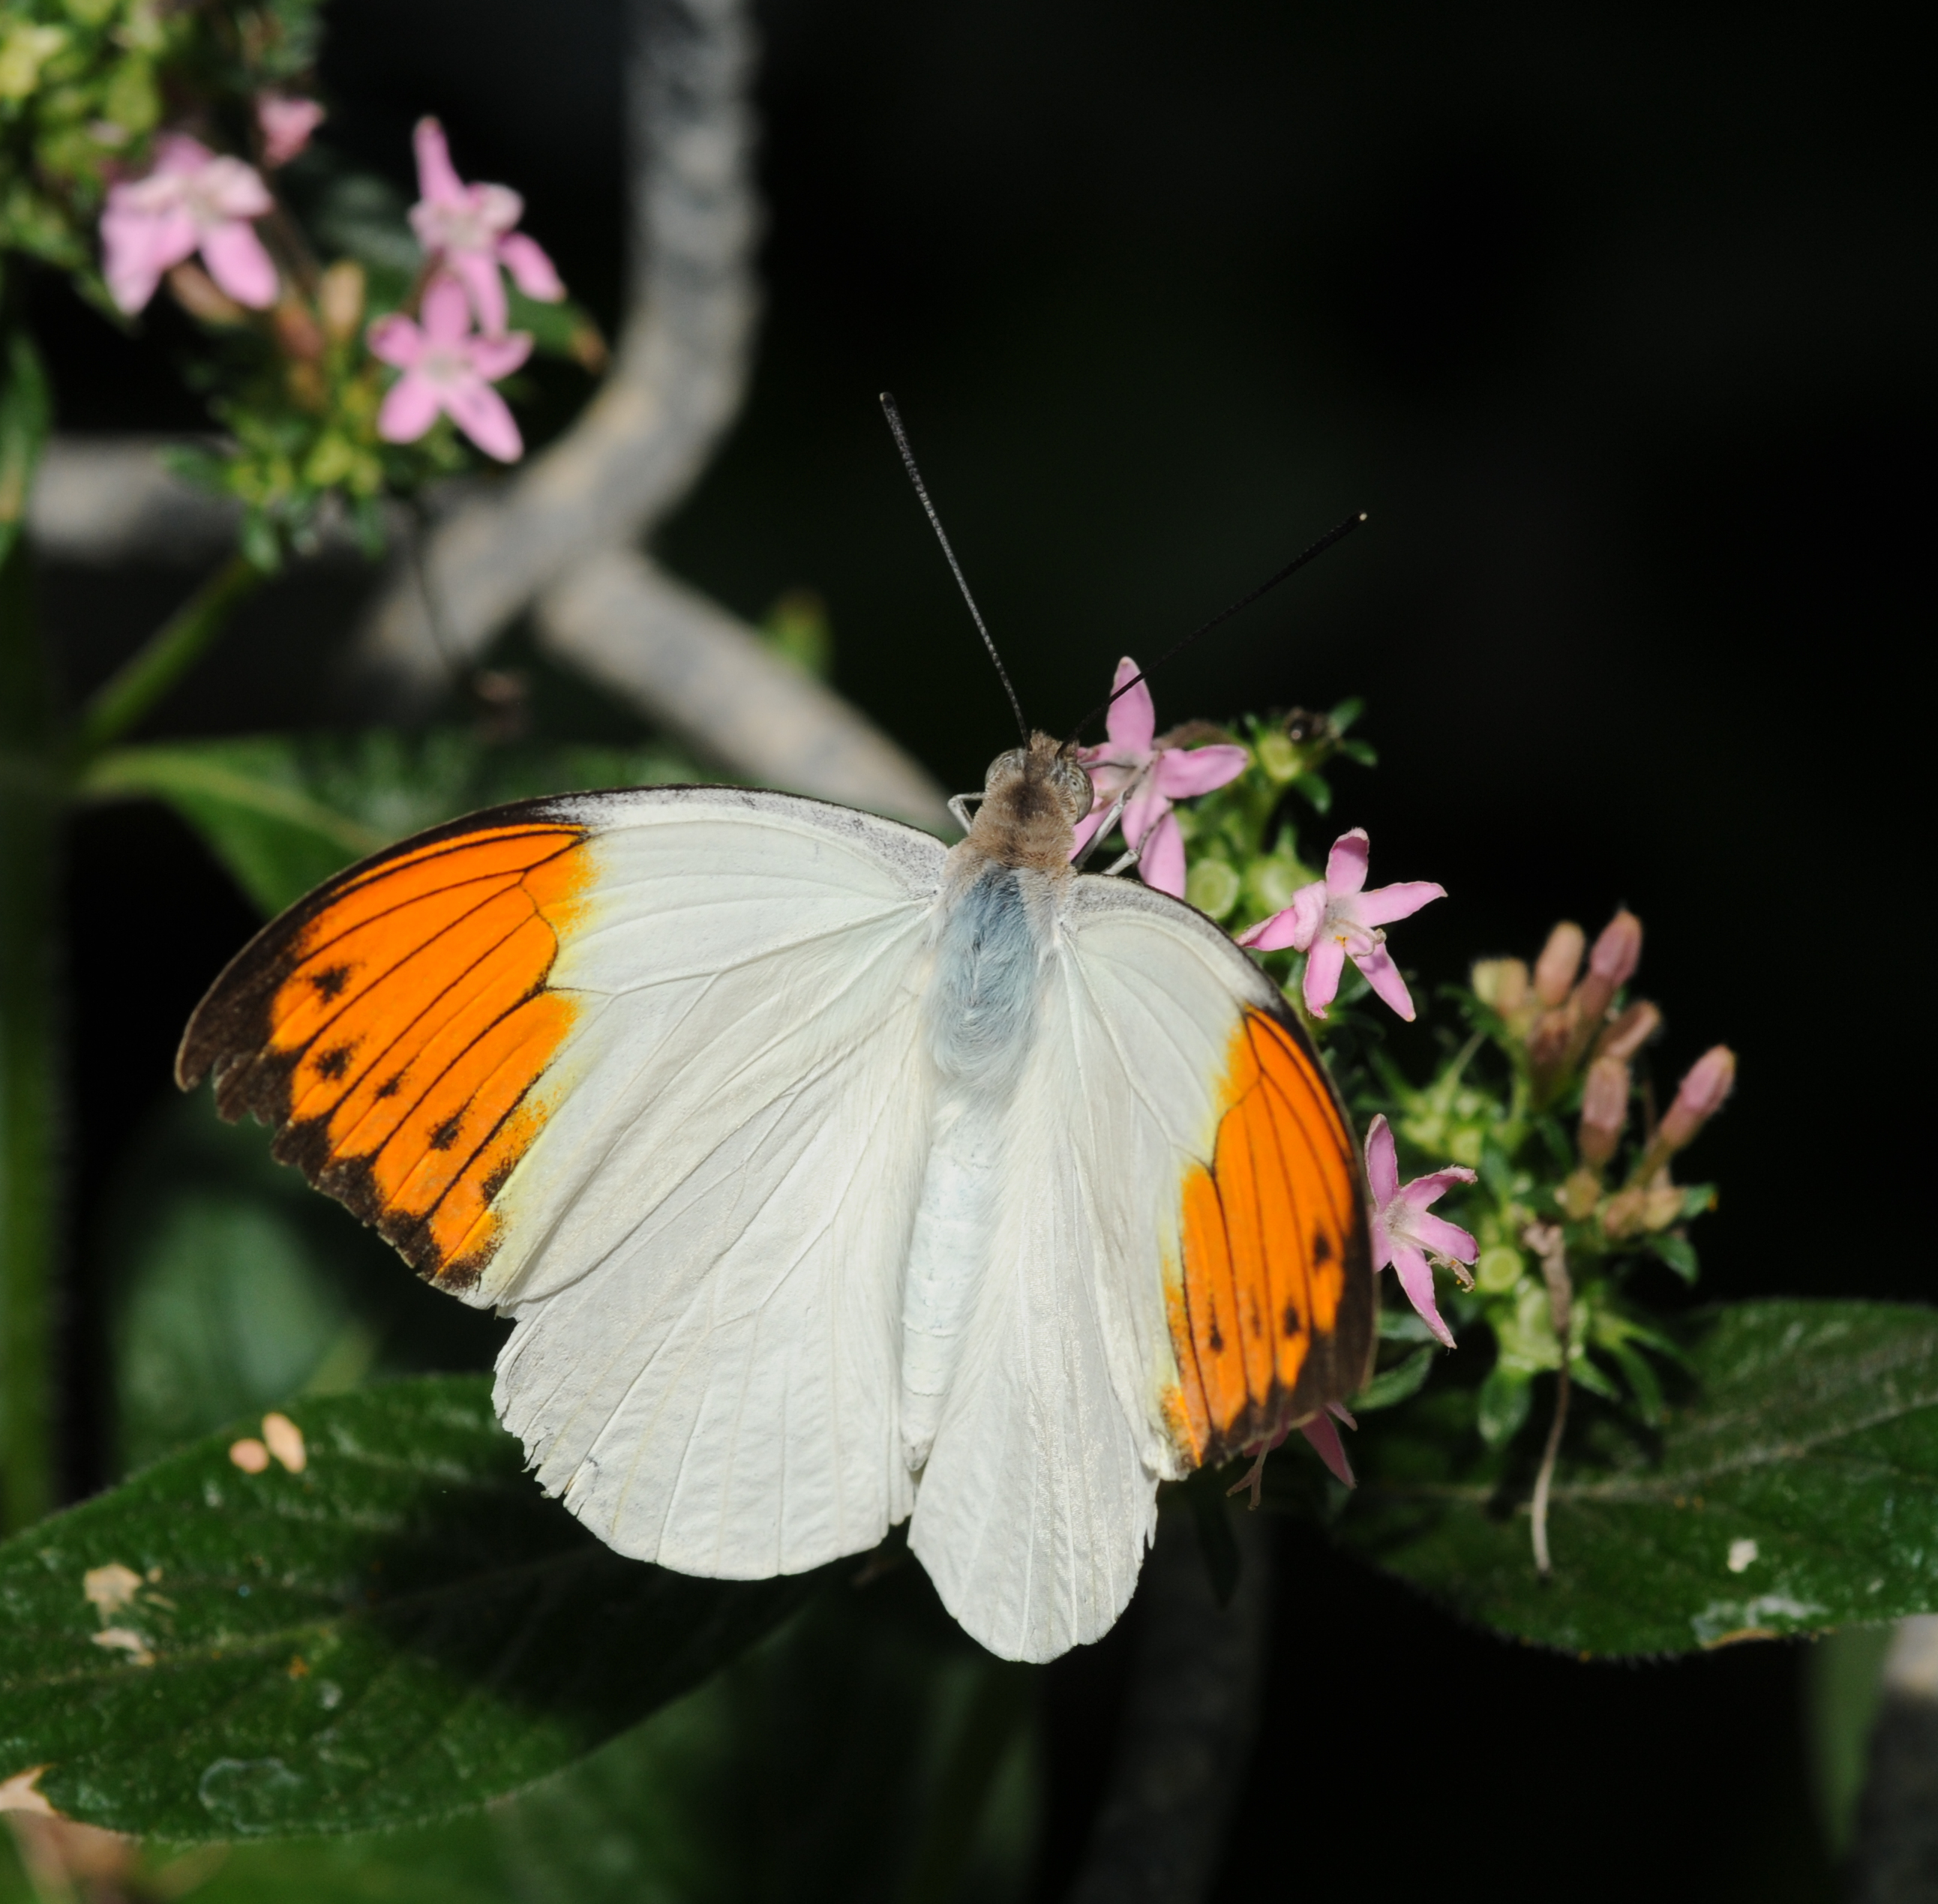 https://upload.wikimedia.org/wikipedia/commons/a/a5/2011-04-25-lepidoptera-hunawihr-2.jpg